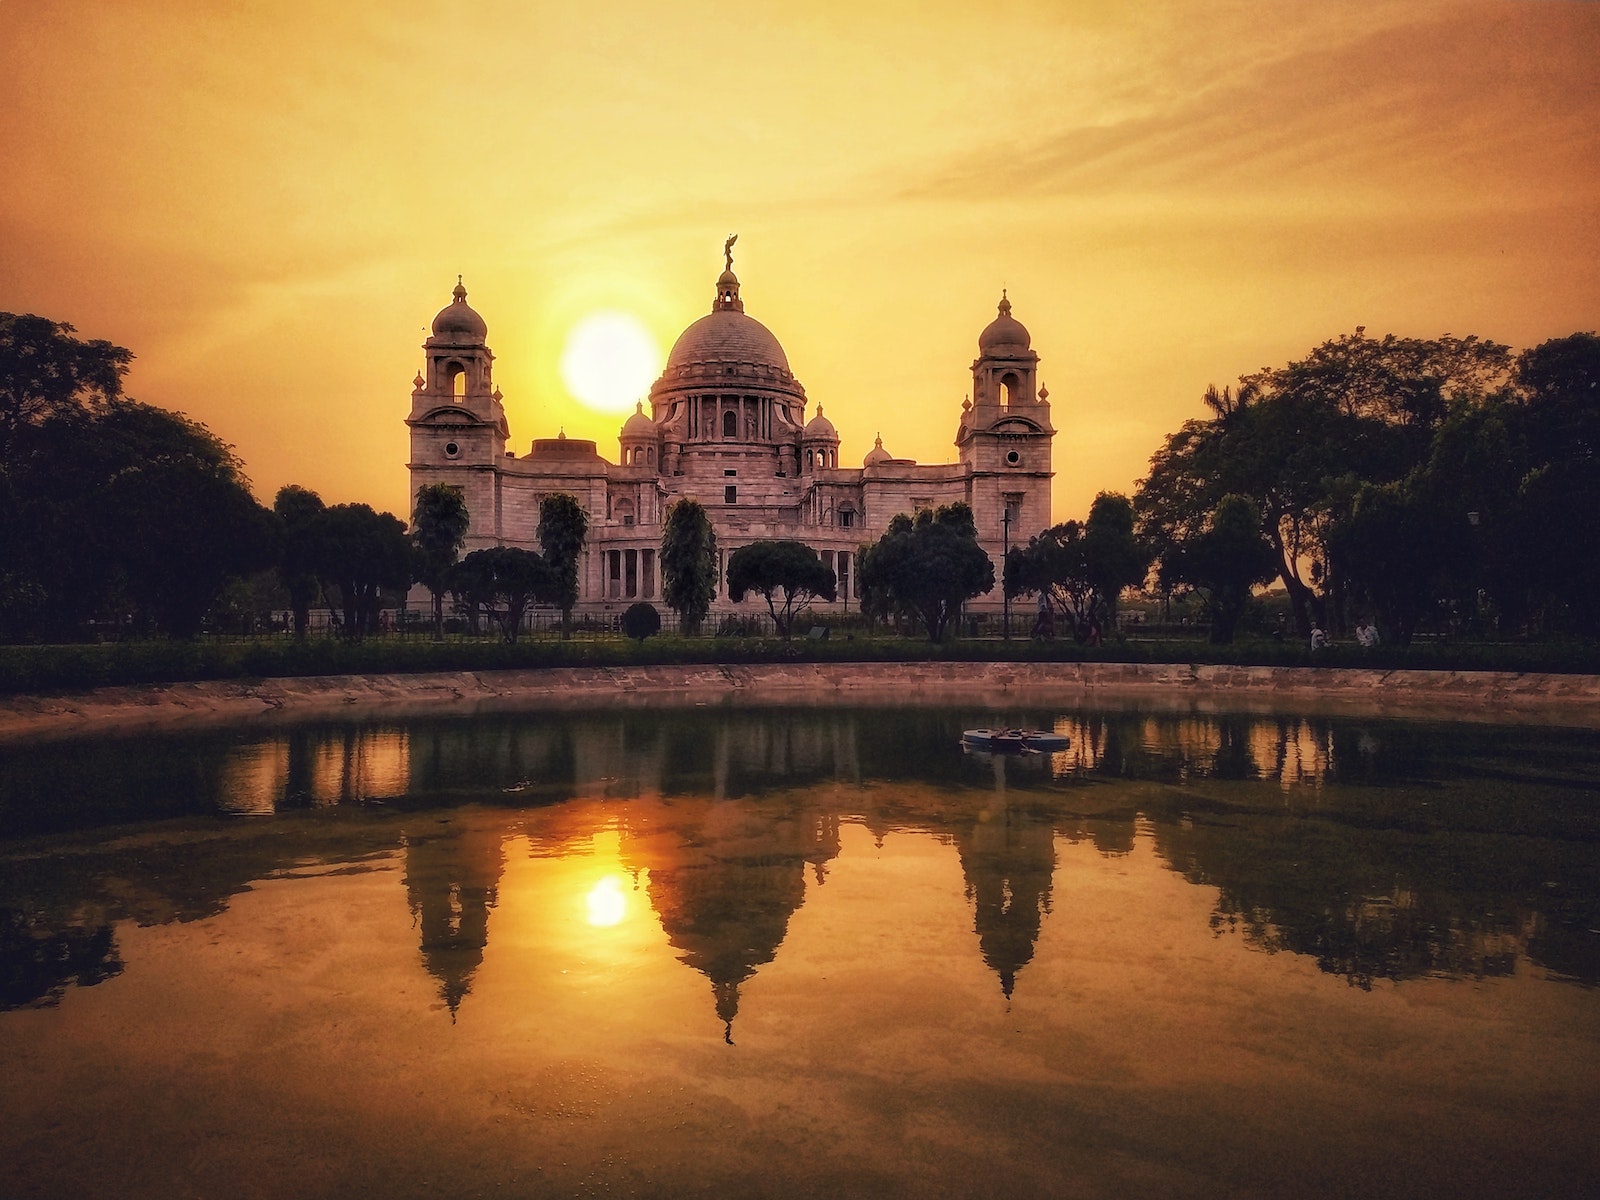 Sunset at the Victoria Memorial in Kolkata, India